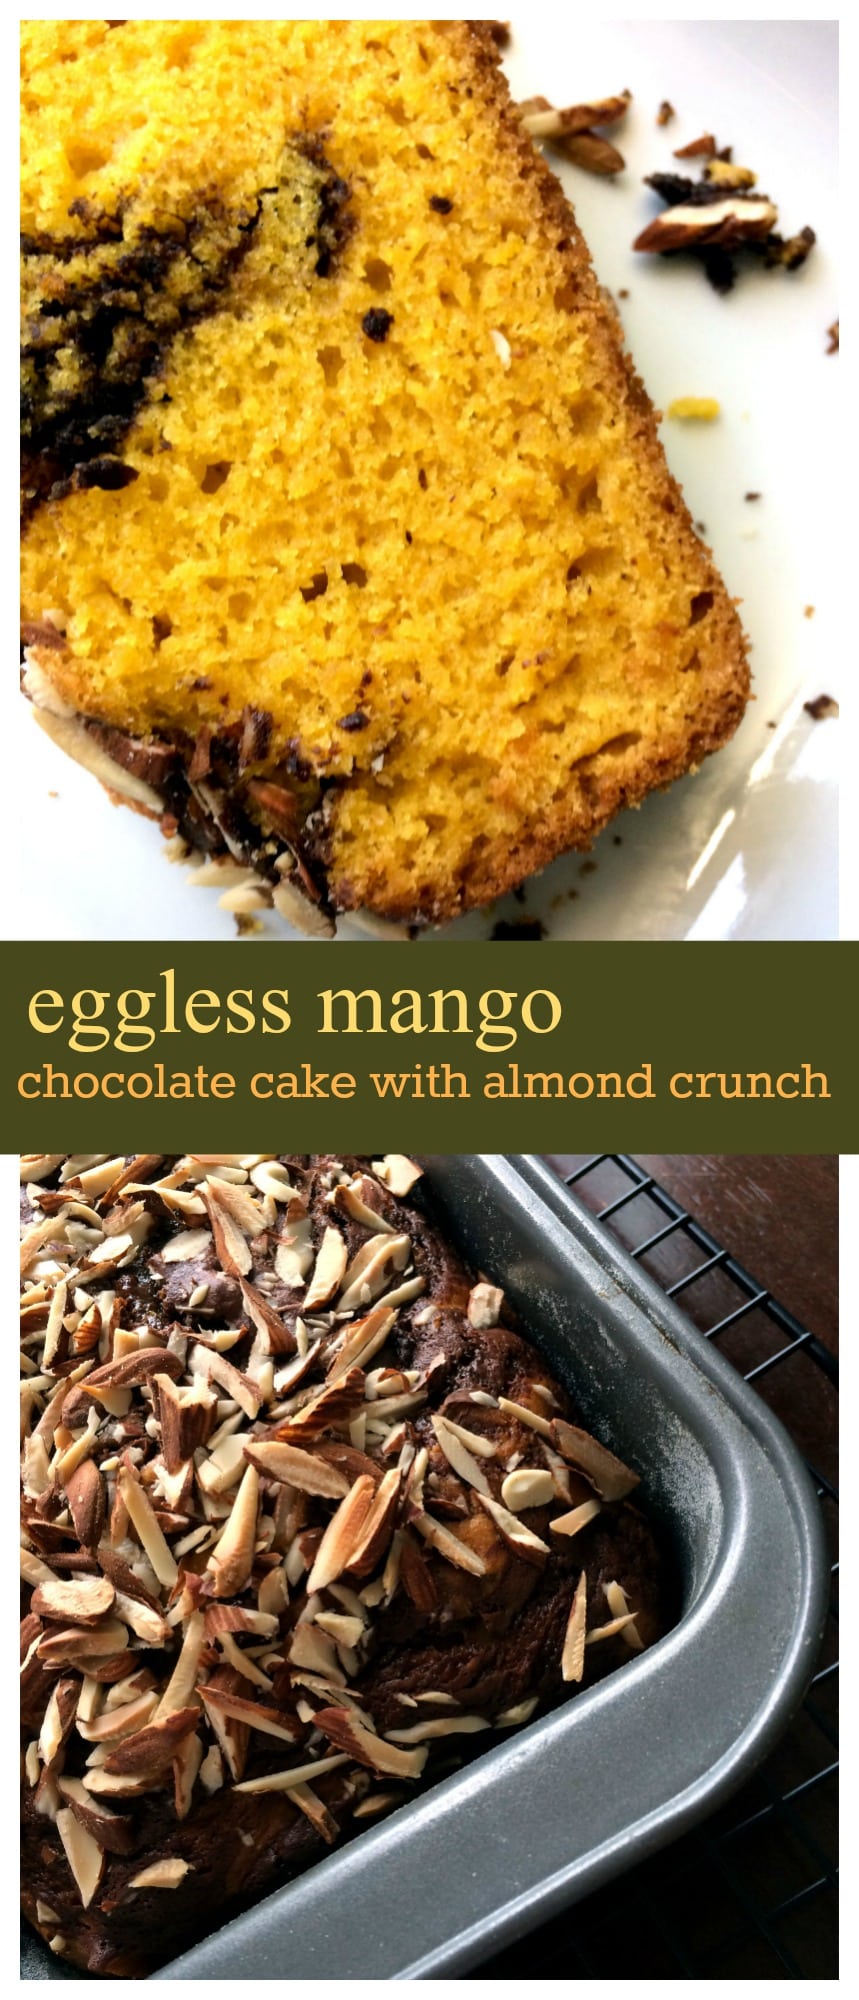 Eggless mango chocolate cake with almond crunch